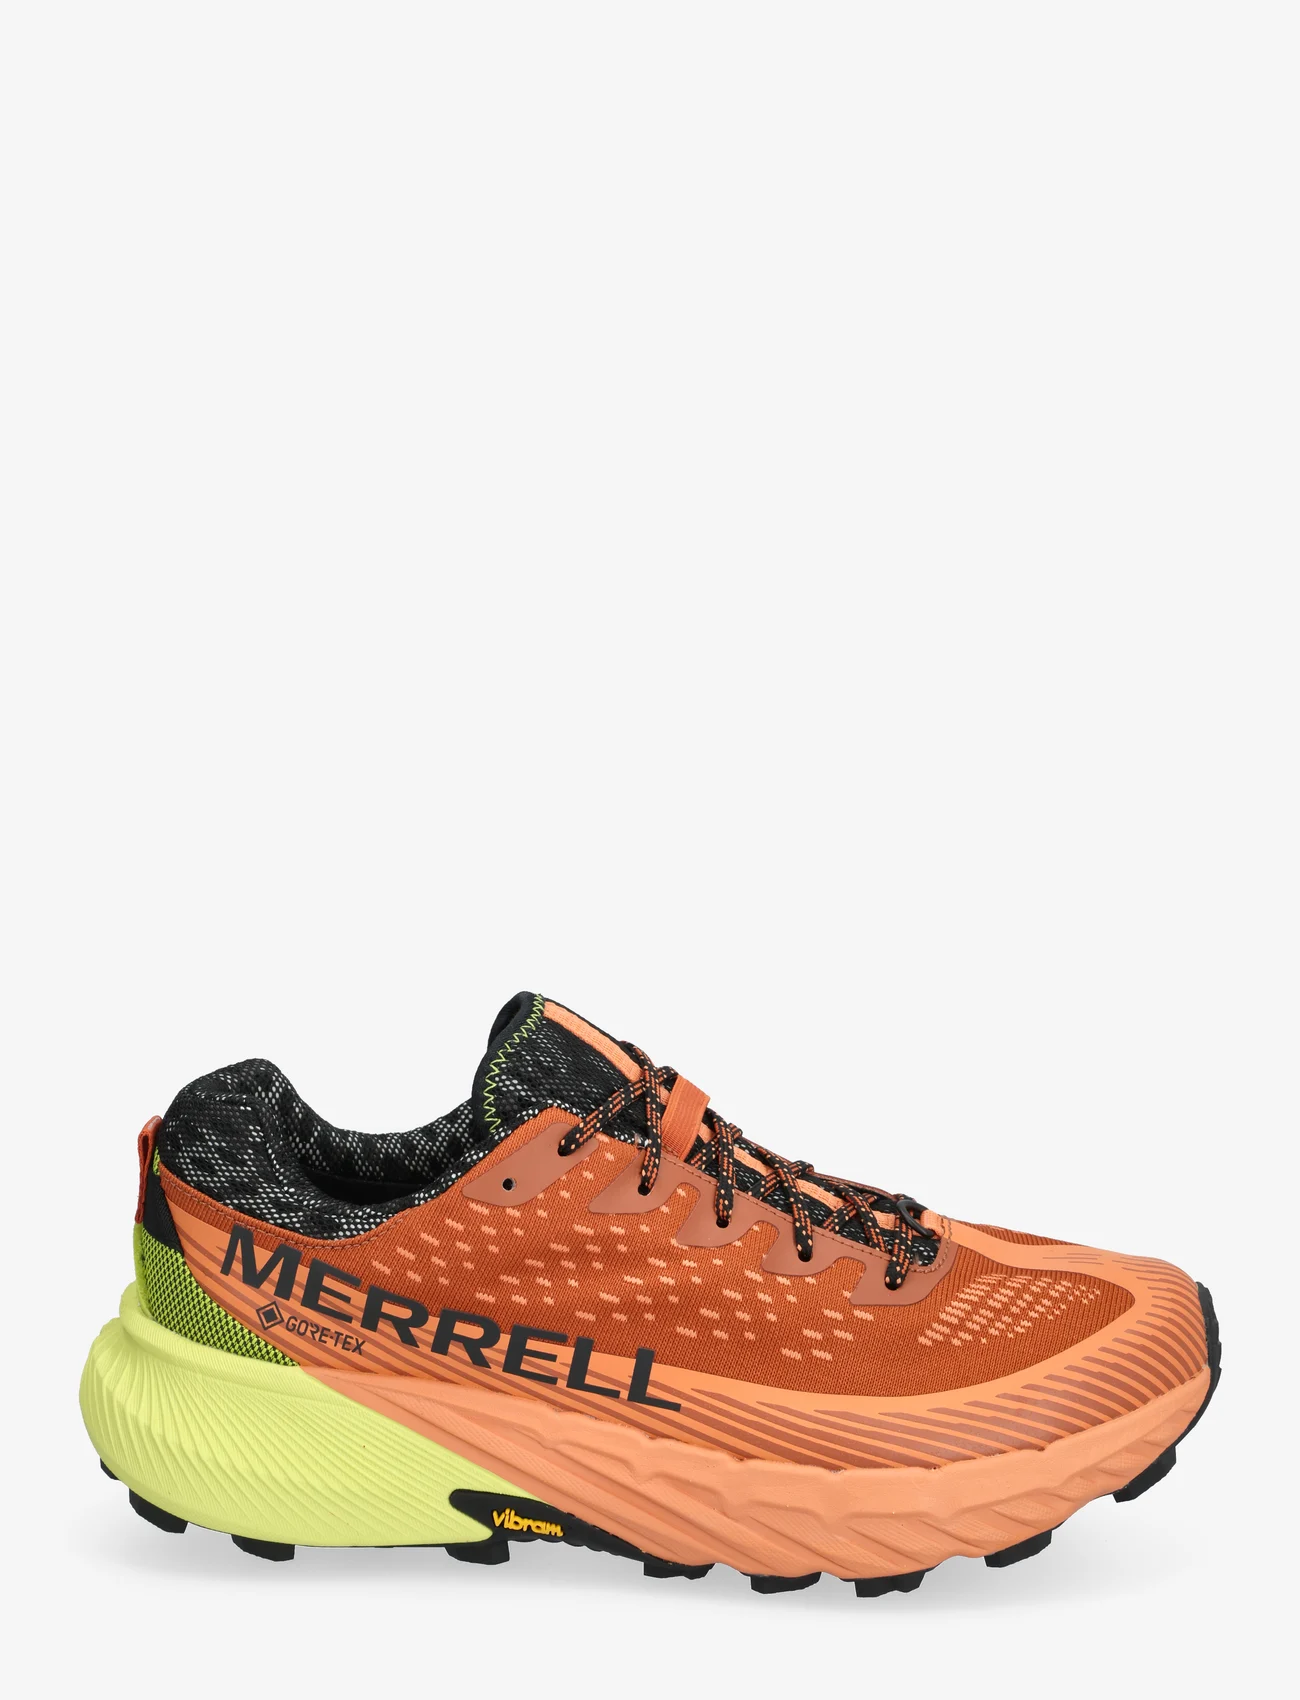 Merrell - Men's Agility Peak 5 GTX - Clay/Mel - løbesko - clay/melon - 1